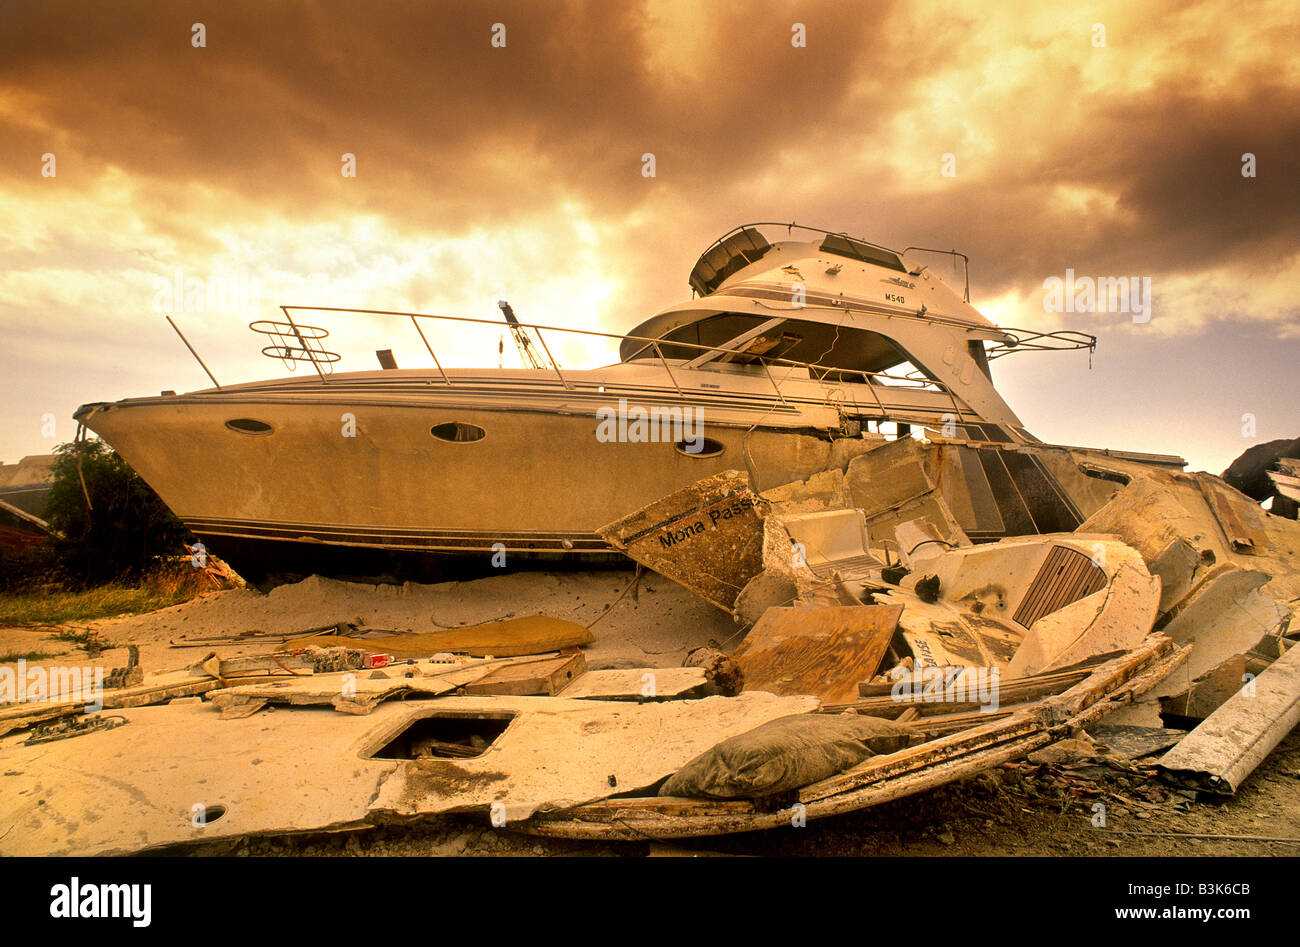 Shipwrecks on a shipyard after a hurricane in the Caribbean Stock Photo